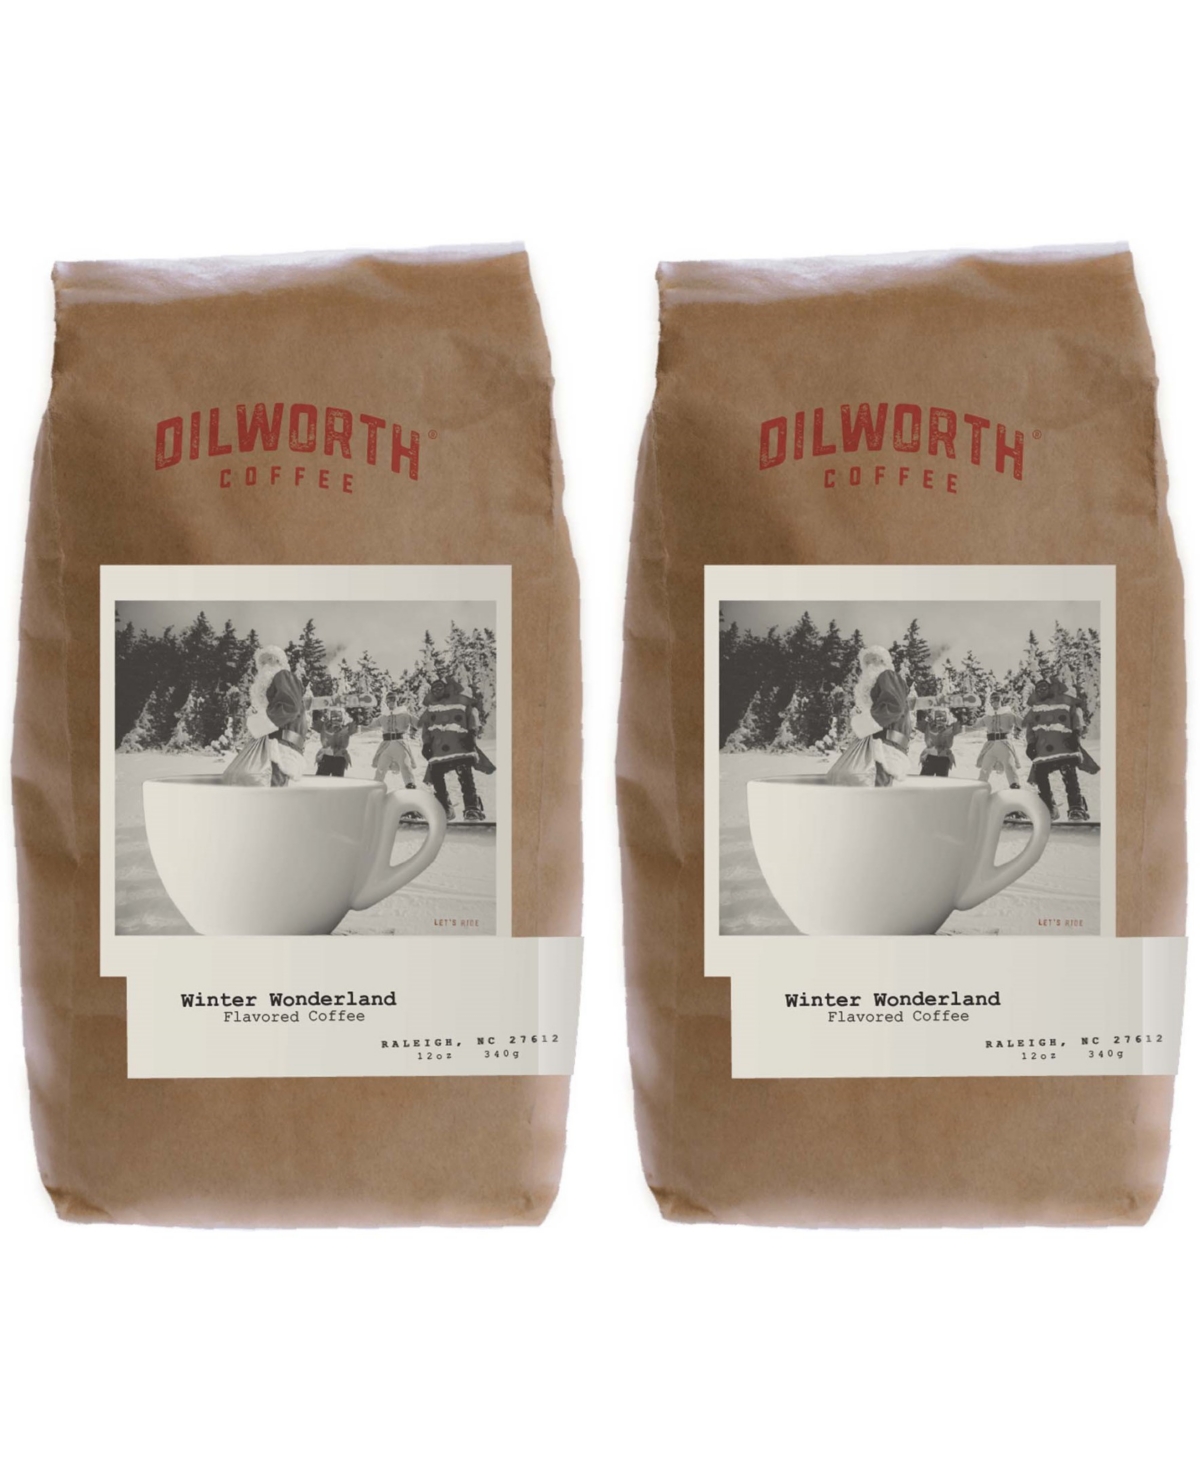 Dilworth Coffee Medium Roast Flavored Ground Coffee - Winter Wonderland, Pack of 2